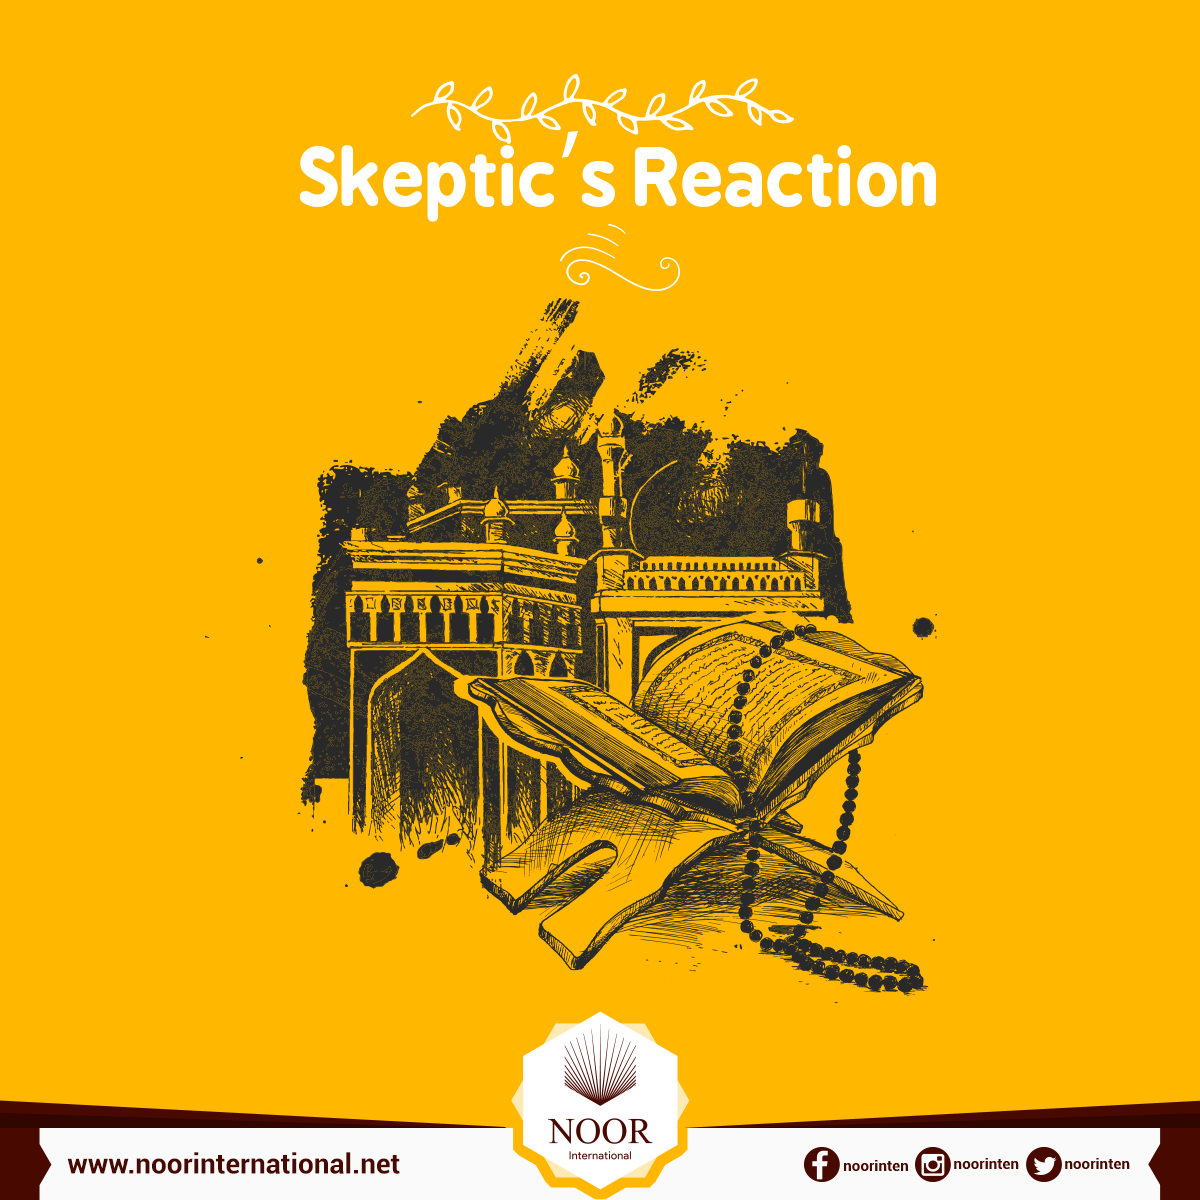 Skeptic’s Reaction